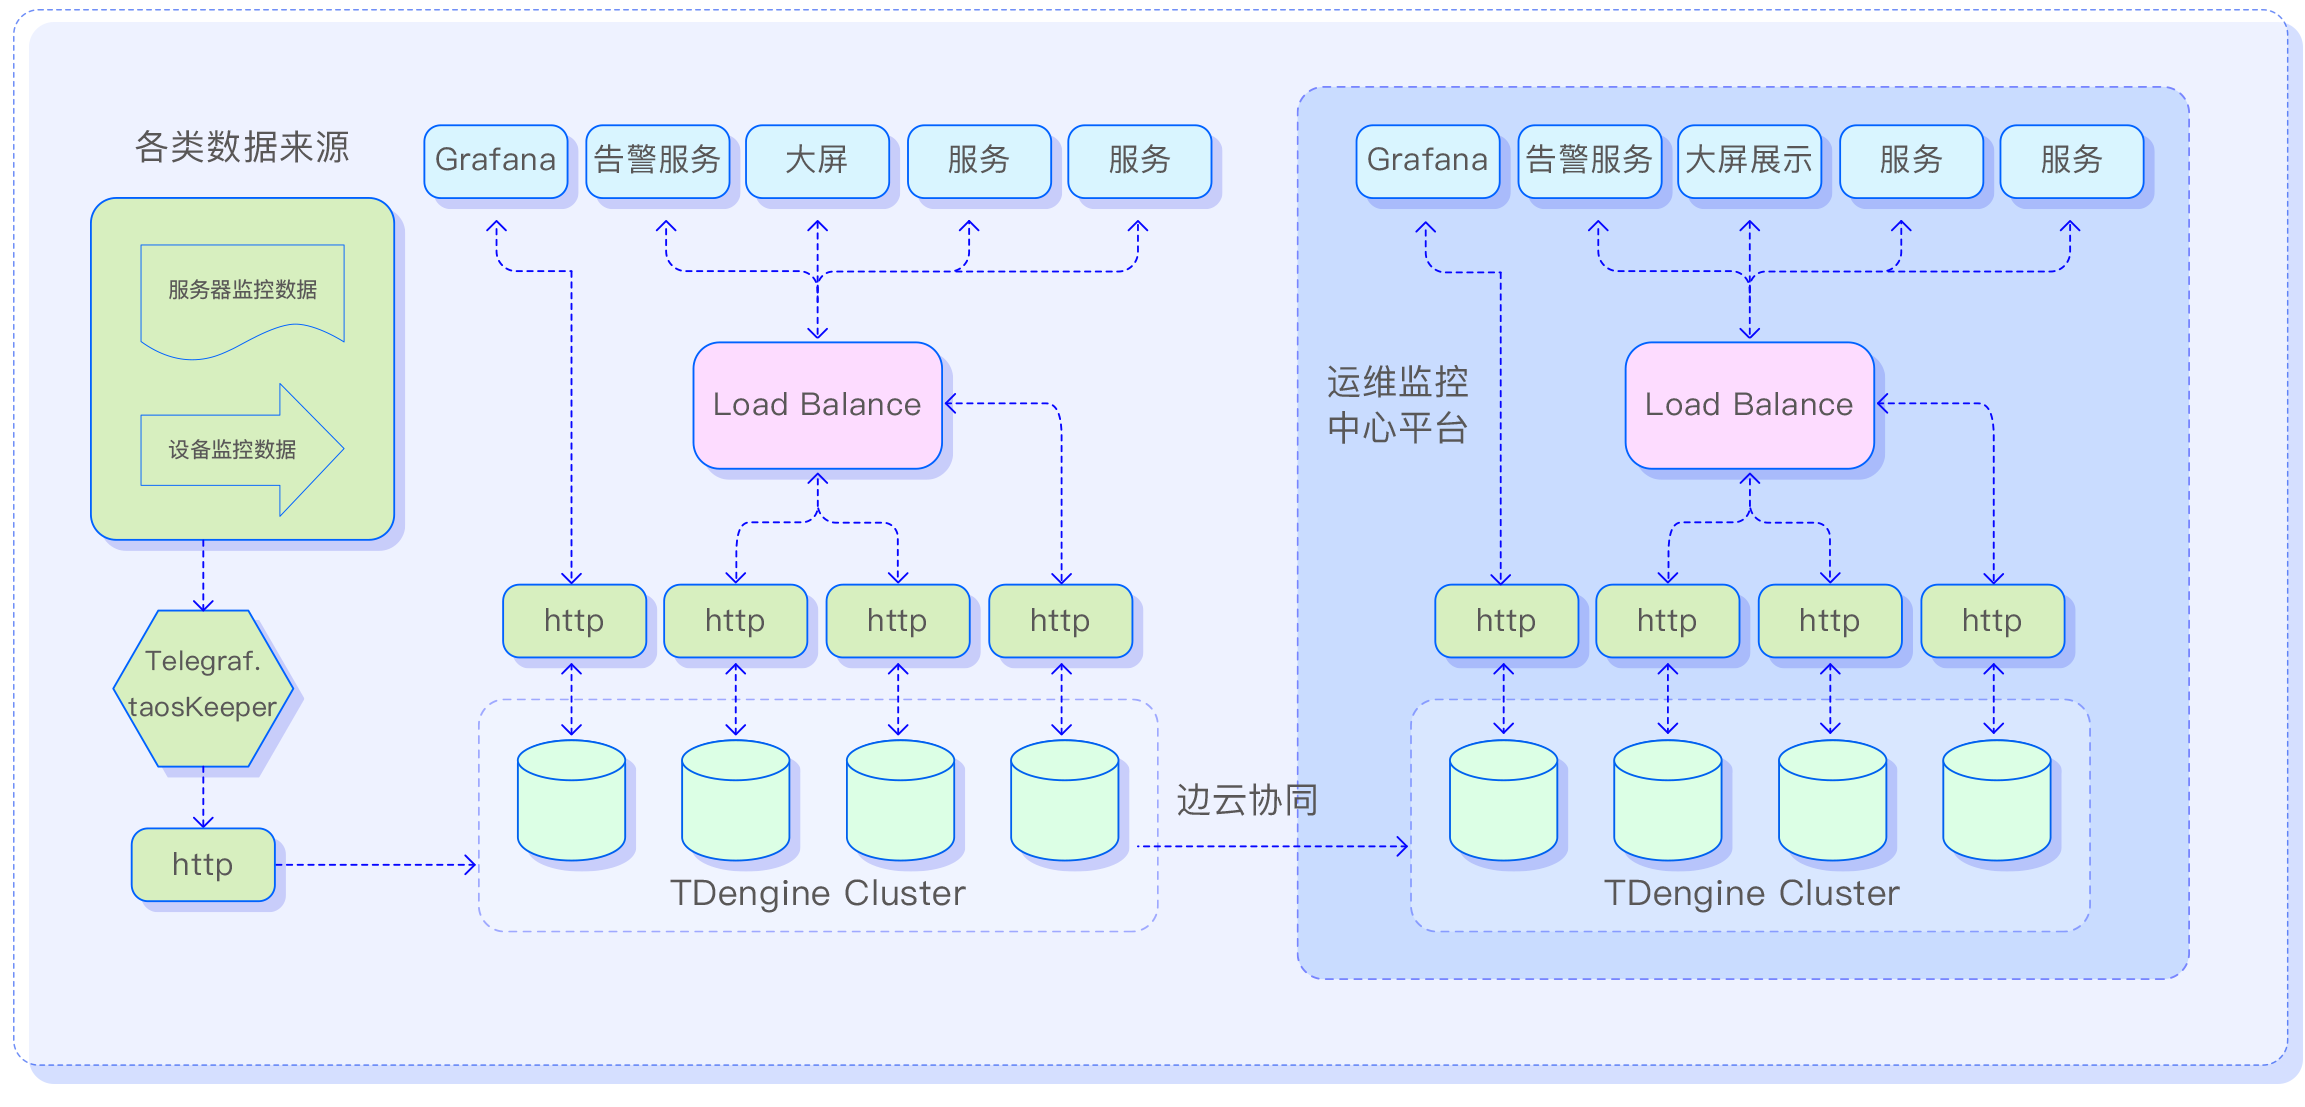 IT 运维32450新蒲京 - TDengine Database 32450新蒲京